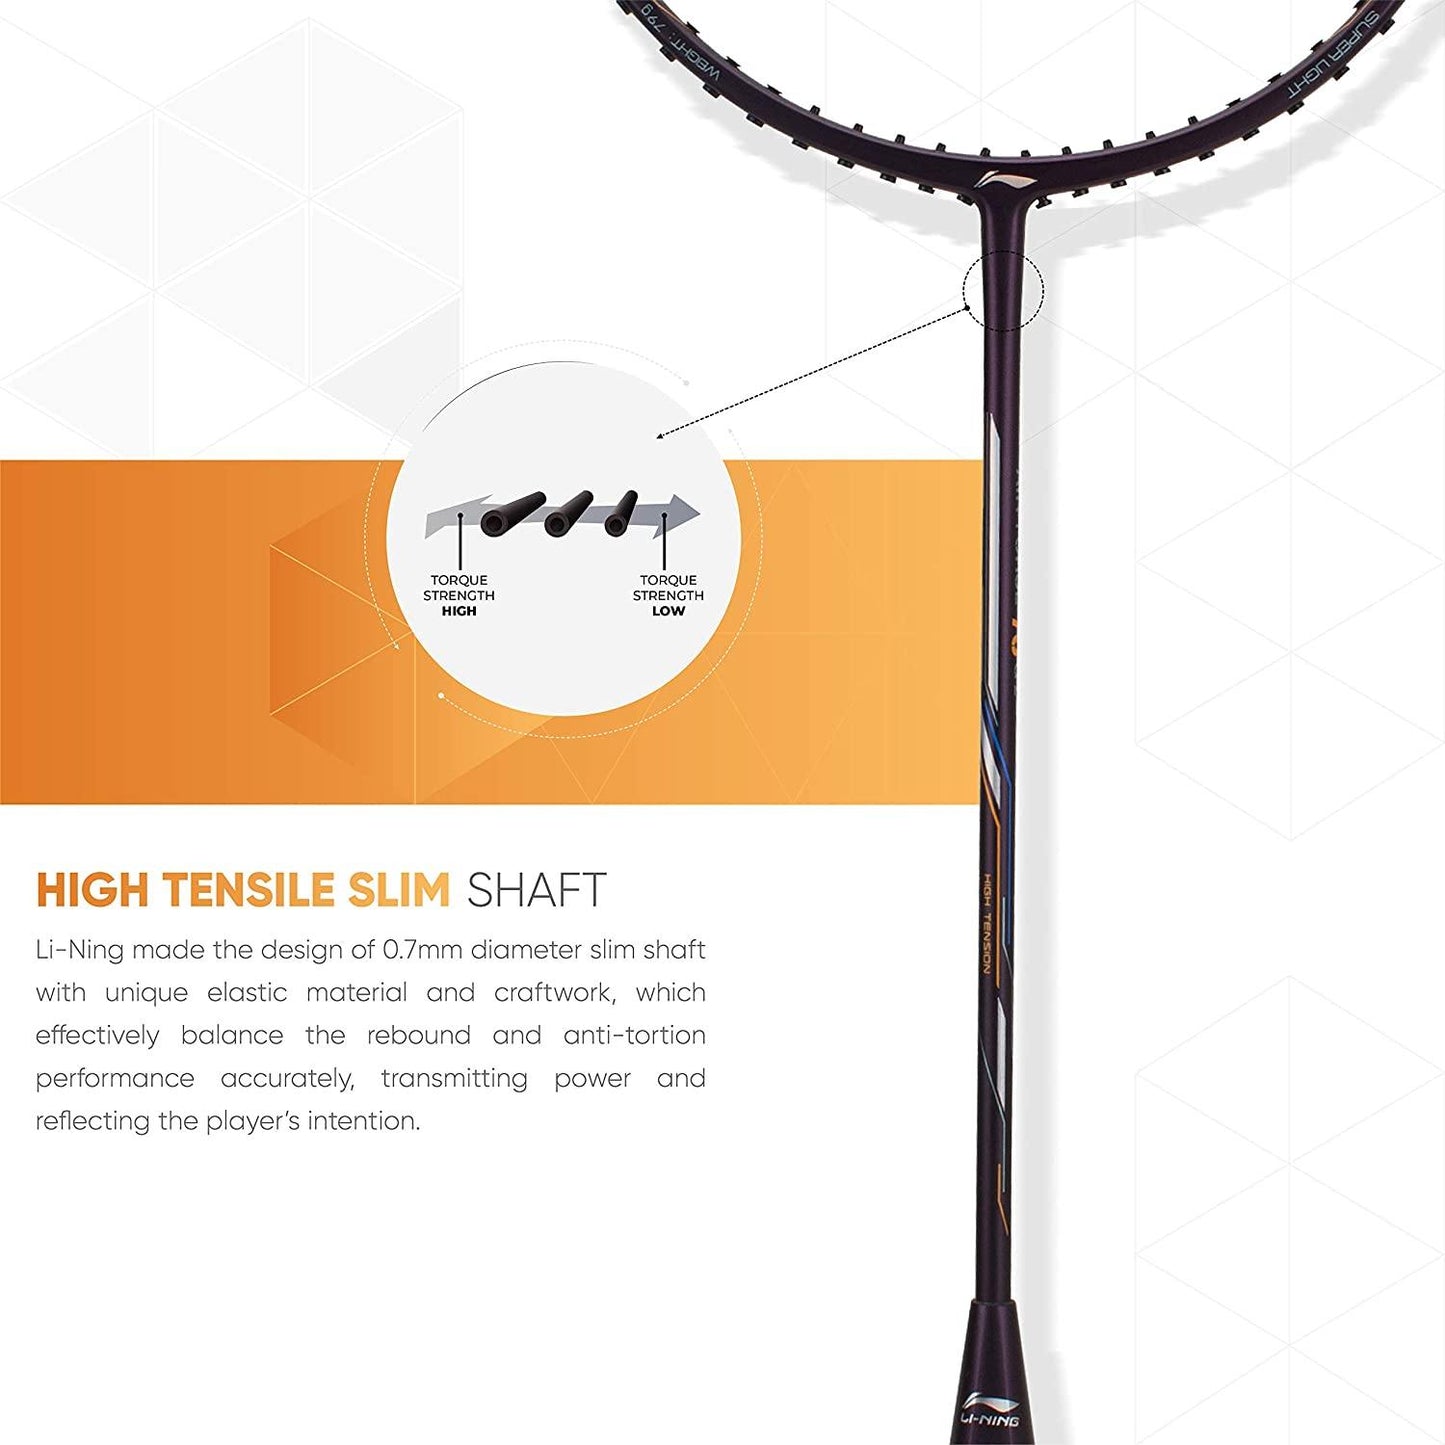 Li-Ning Air Force G2 Carbon Fibre Badminton Racket - 79 Grams - Best Price online Prokicksports.com